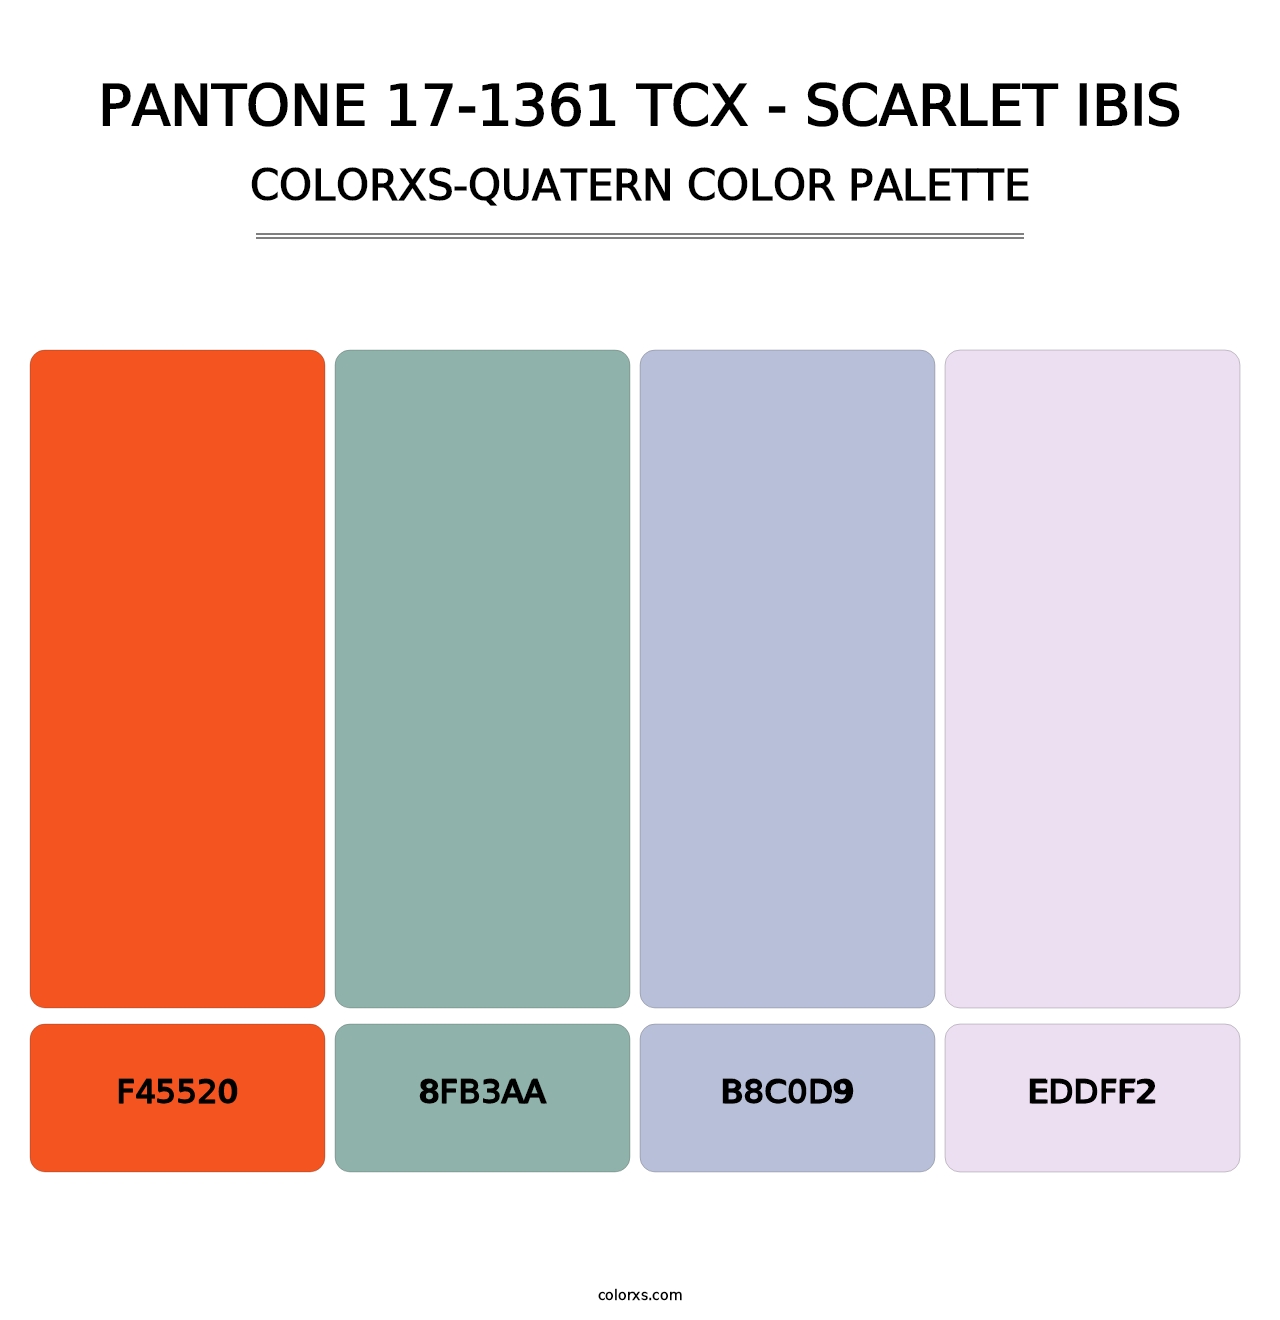 PANTONE 17-1361 TCX - Scarlet Ibis - Colorxs Quatern Palette